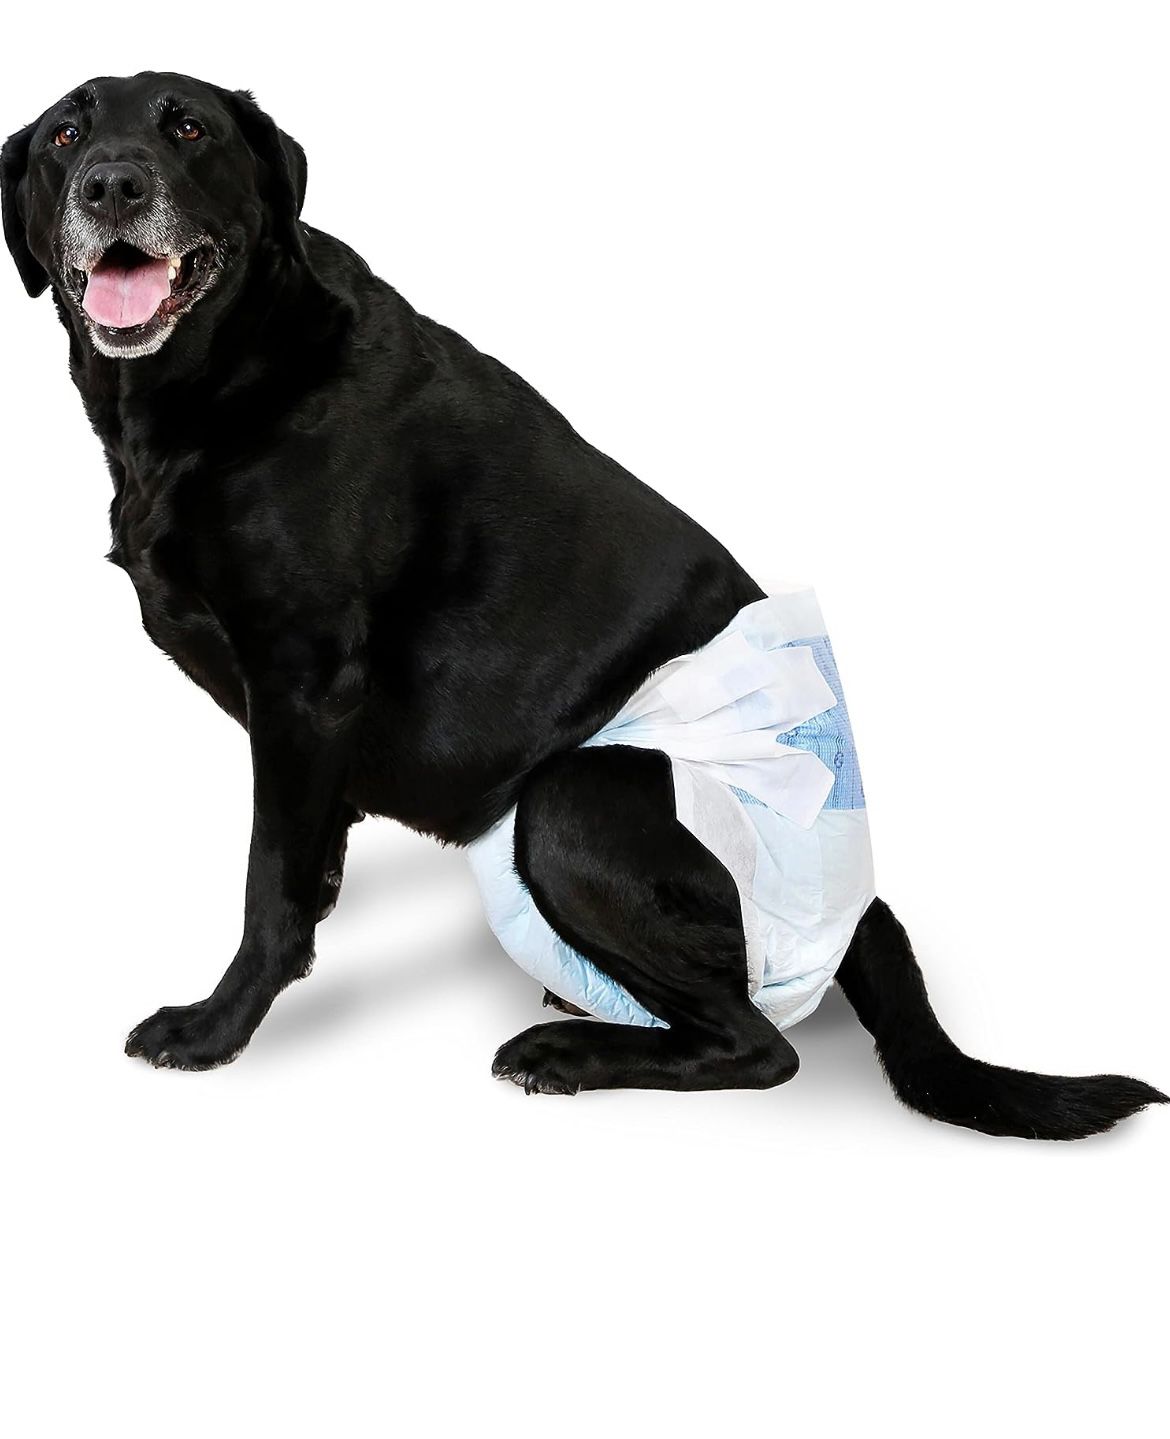 Hartz Disposable Dog Diapers, Size L 5 count, Comfortable & Secure Fit